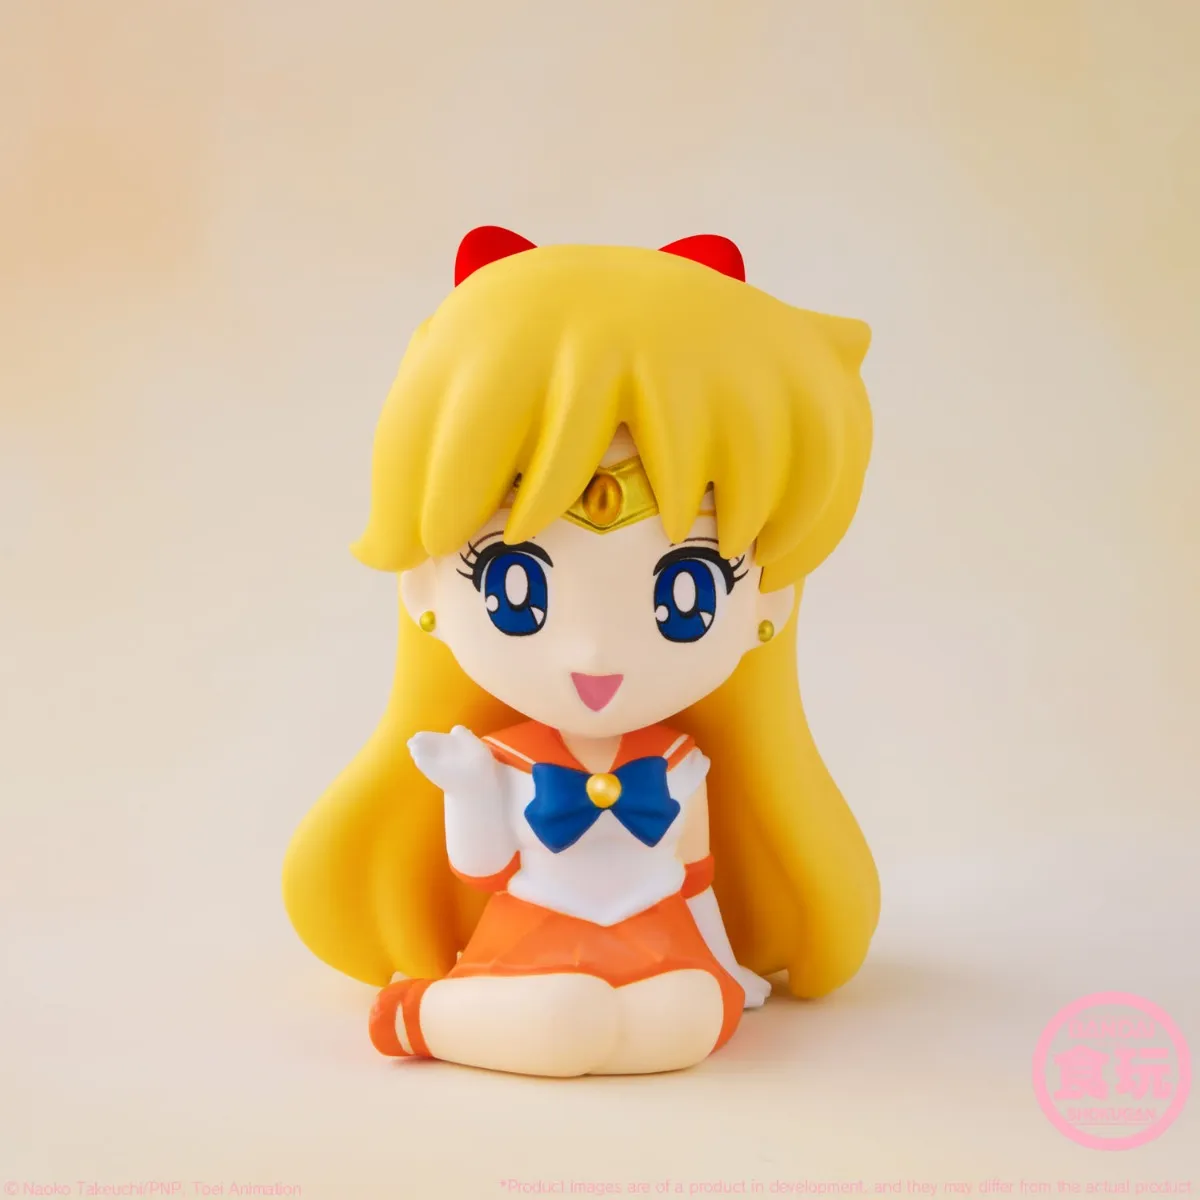 Relaxing Mascot Sailor Moon "Sailor Moon", Bandai Shokugan Relaxing Mascot